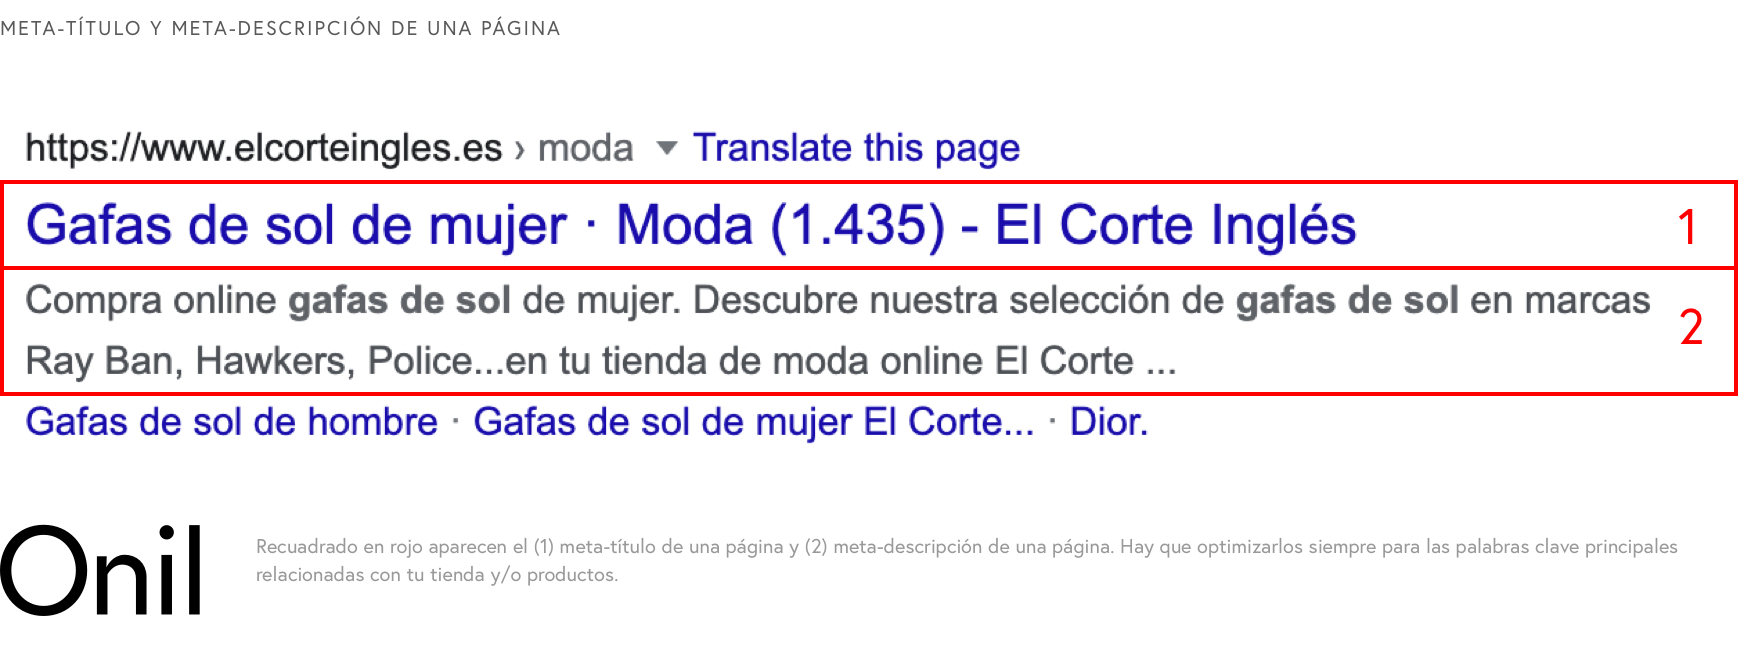 Meta-title and meta-description in google